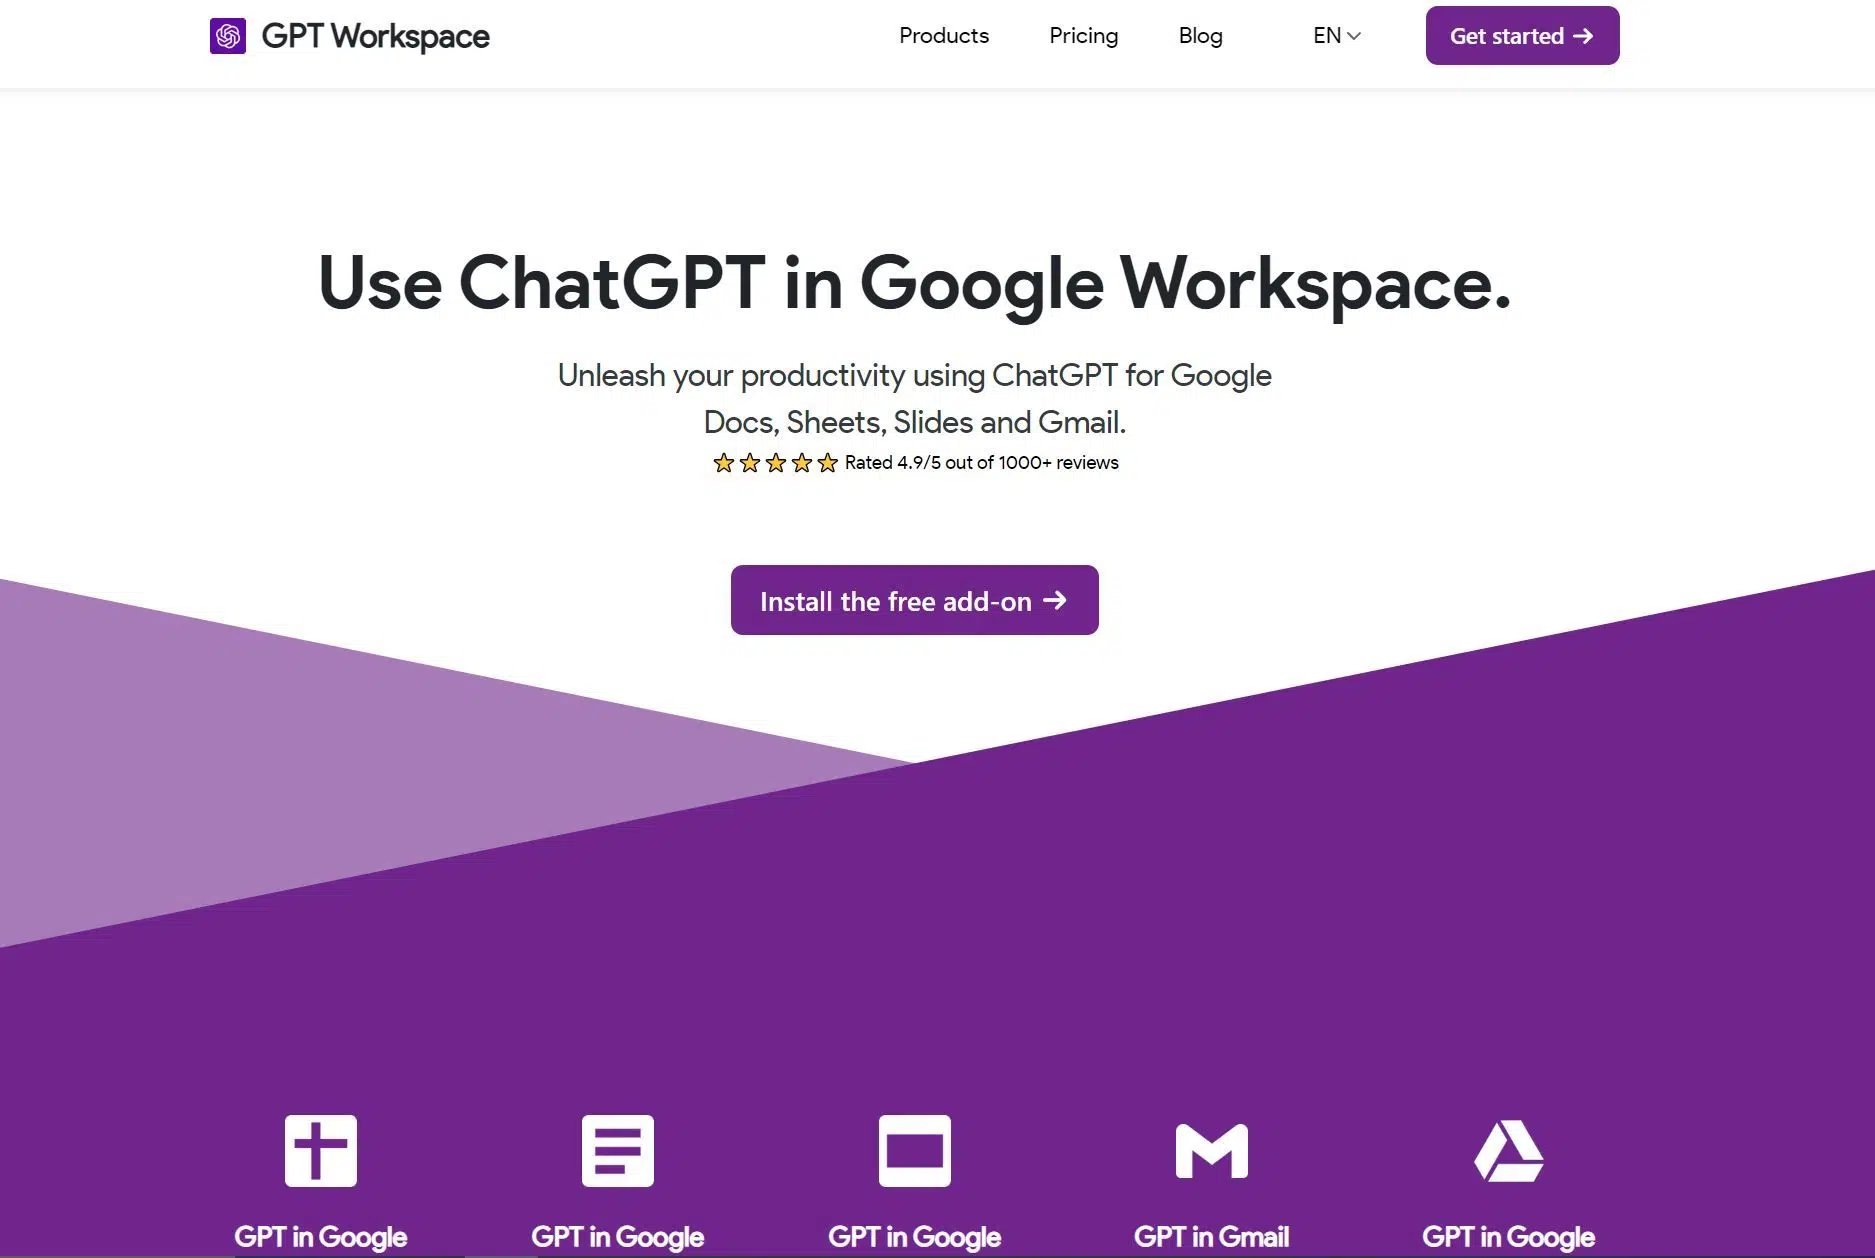 GPT Workspacewebsite picture